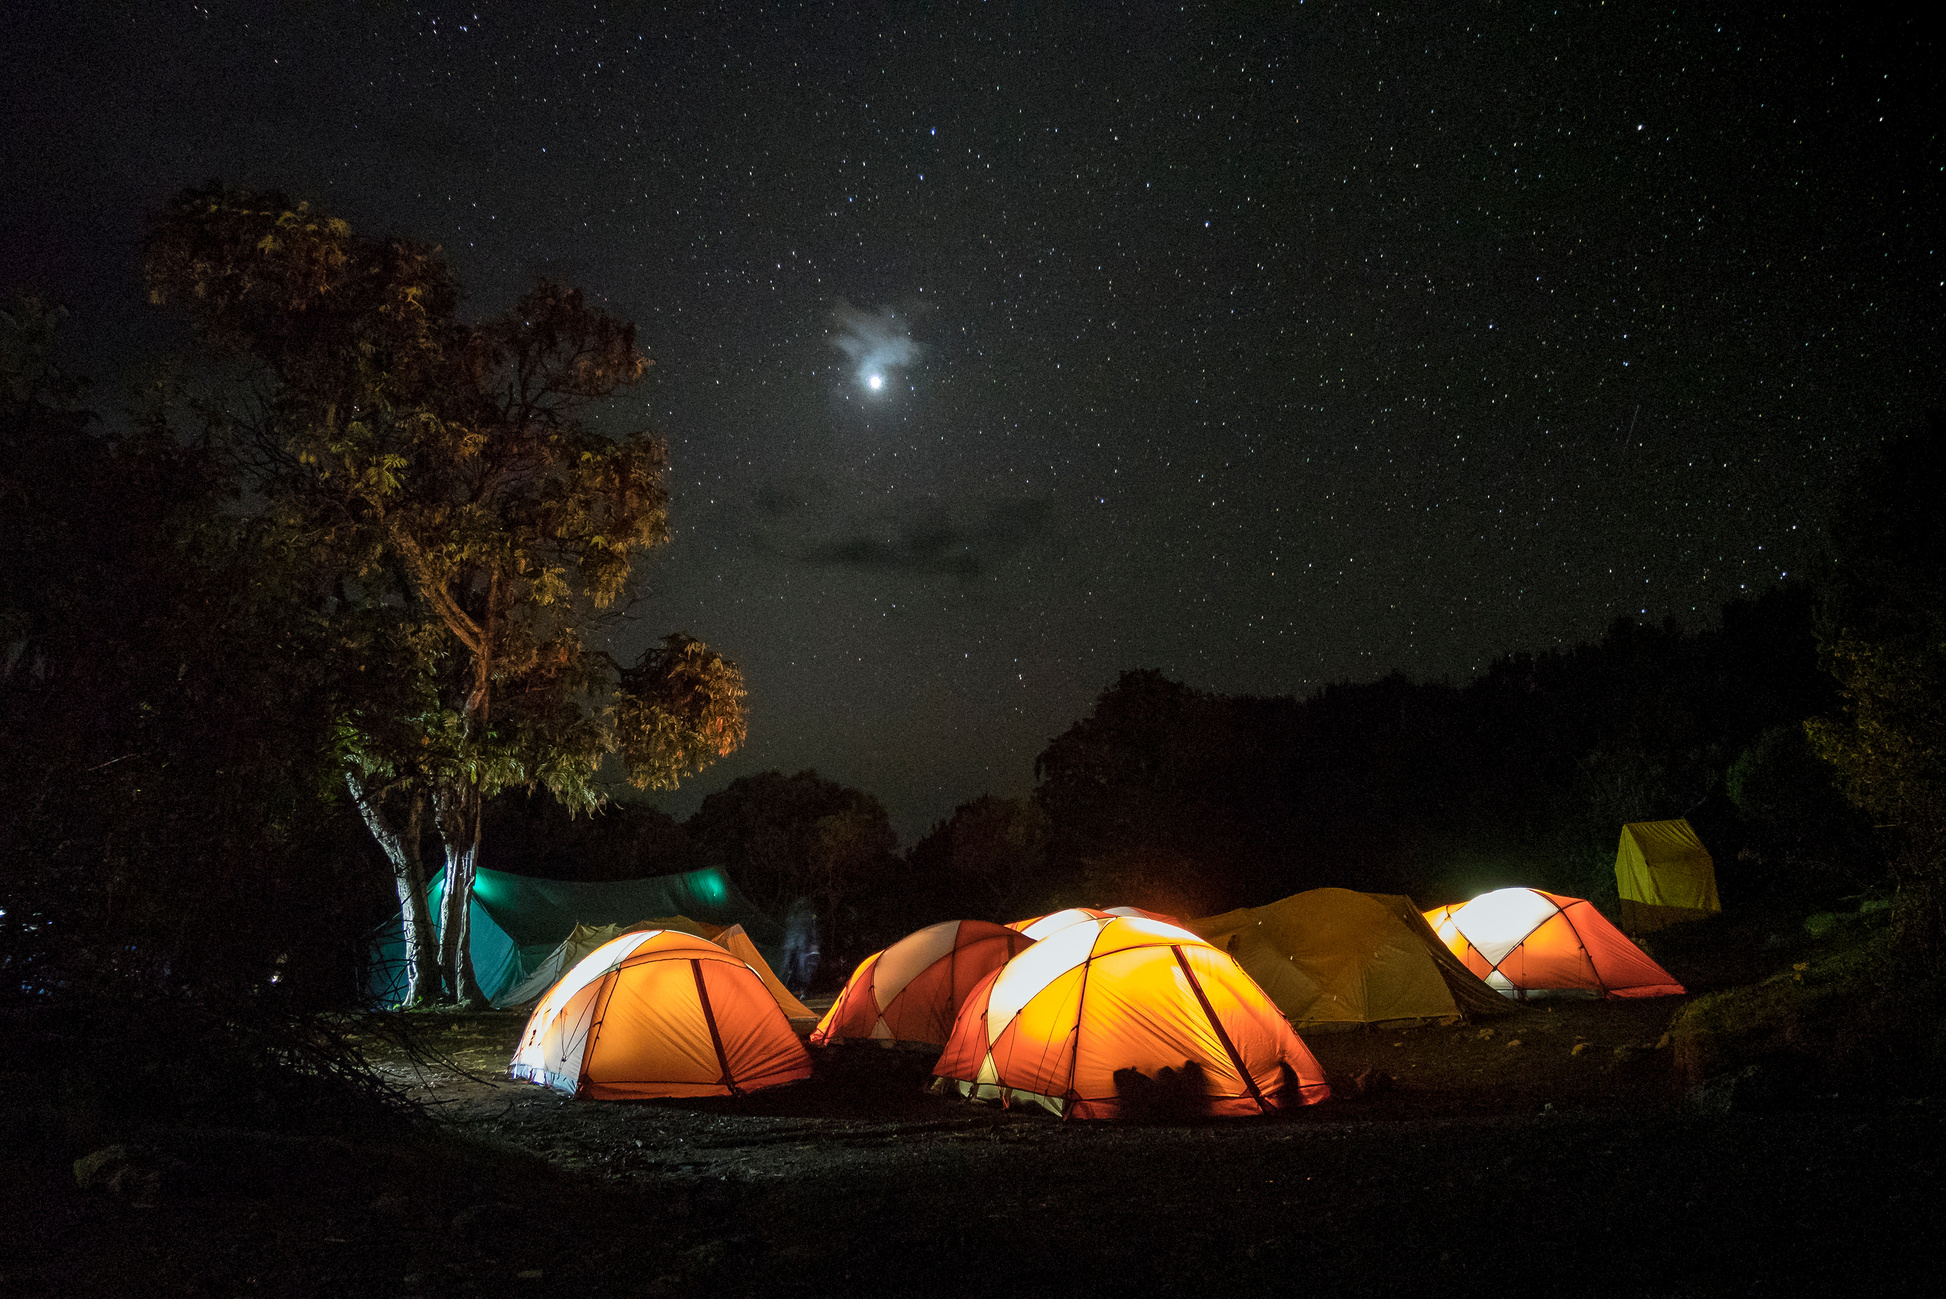 Tents for Kilimajaro hikers, Tanzania